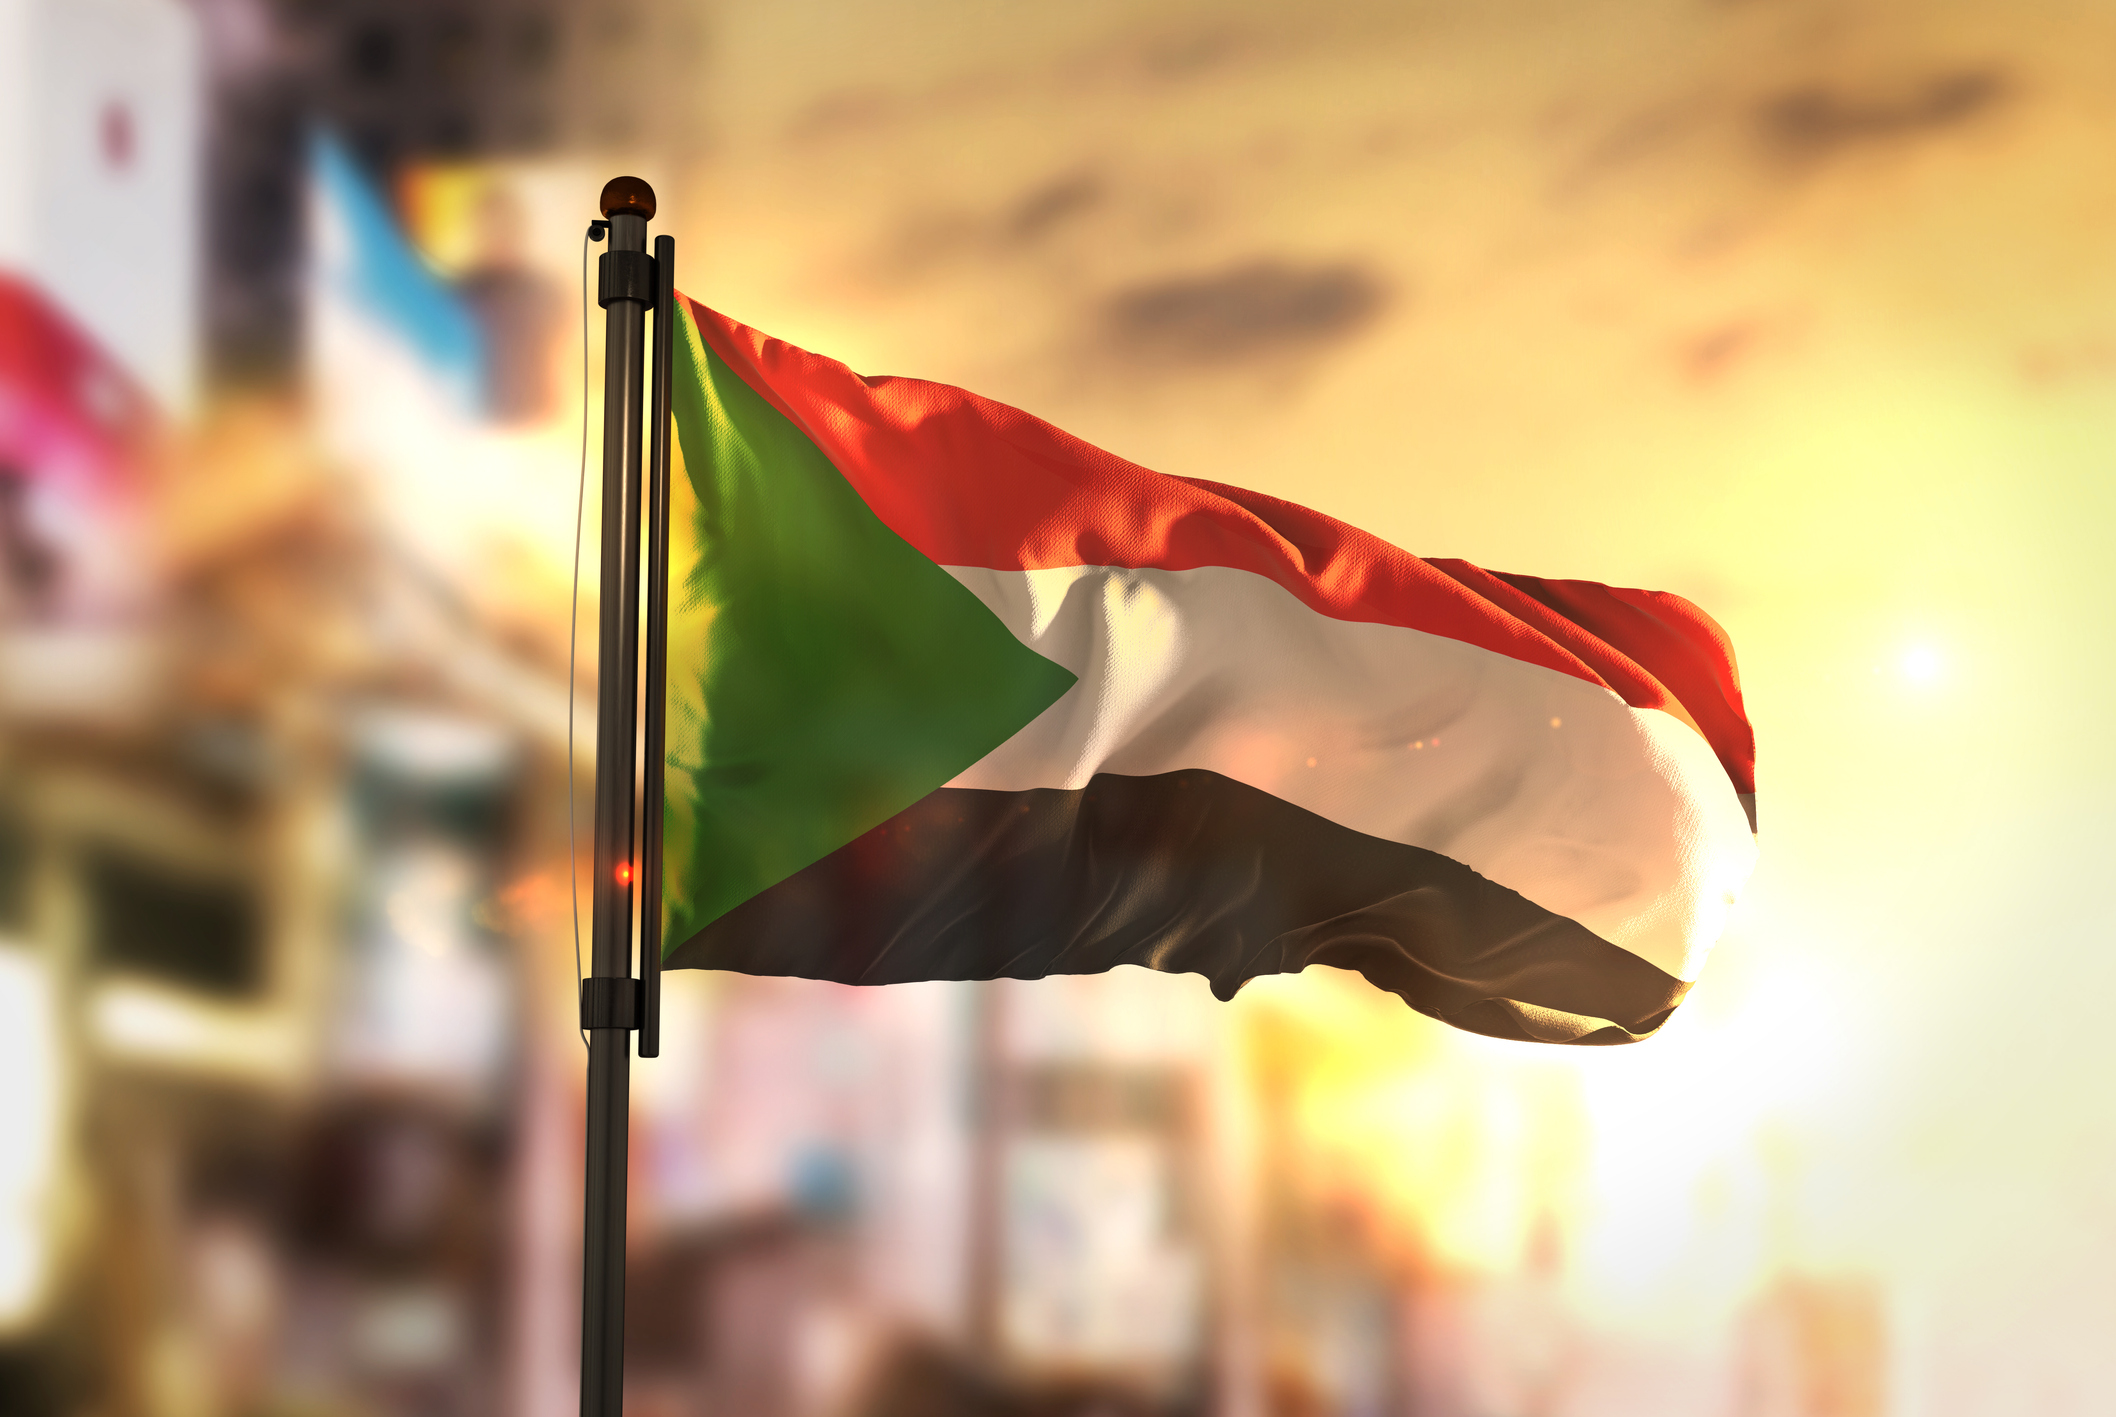 64HJIM7YWBBMRPBOCKM7D6BSXM - بانک مرکزی سودان همچنان که اقتصاد این کشور آسیب می بیند نسبت به استفاده از رمزارز هشدار داد